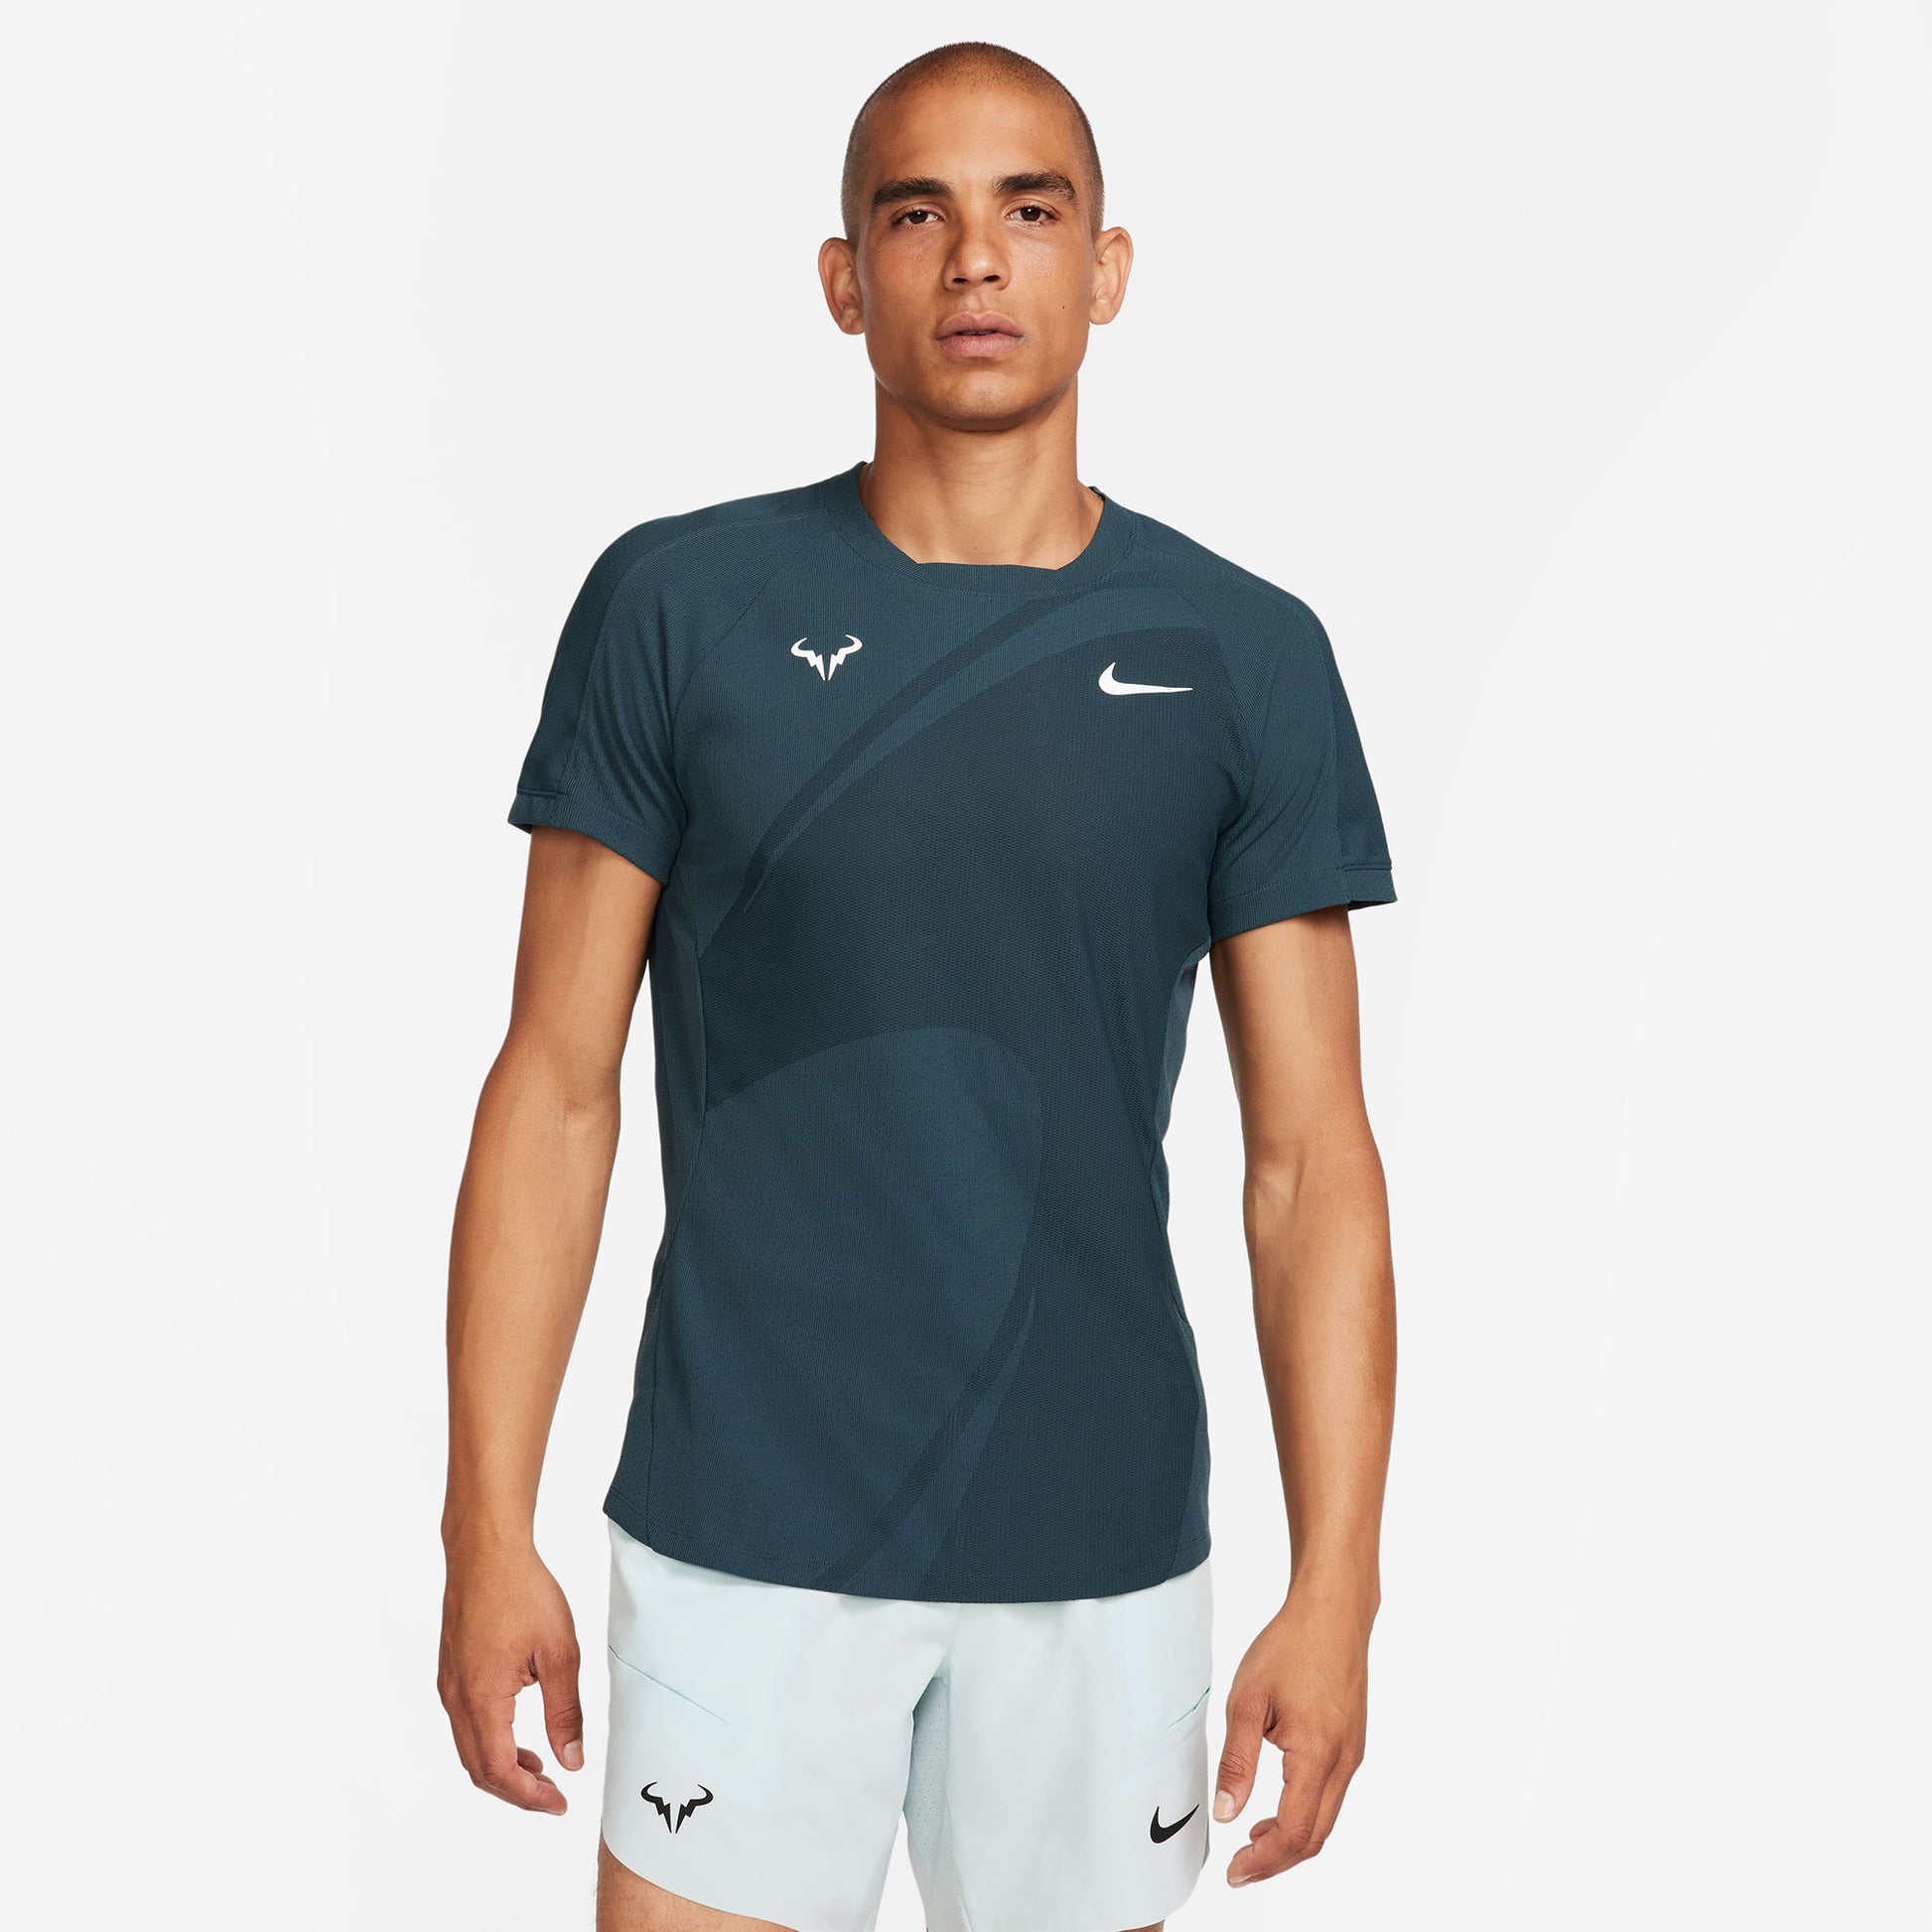 NikeCourt Rafa Dri-FIT ADV Men's Tennis Shirt Green (1)